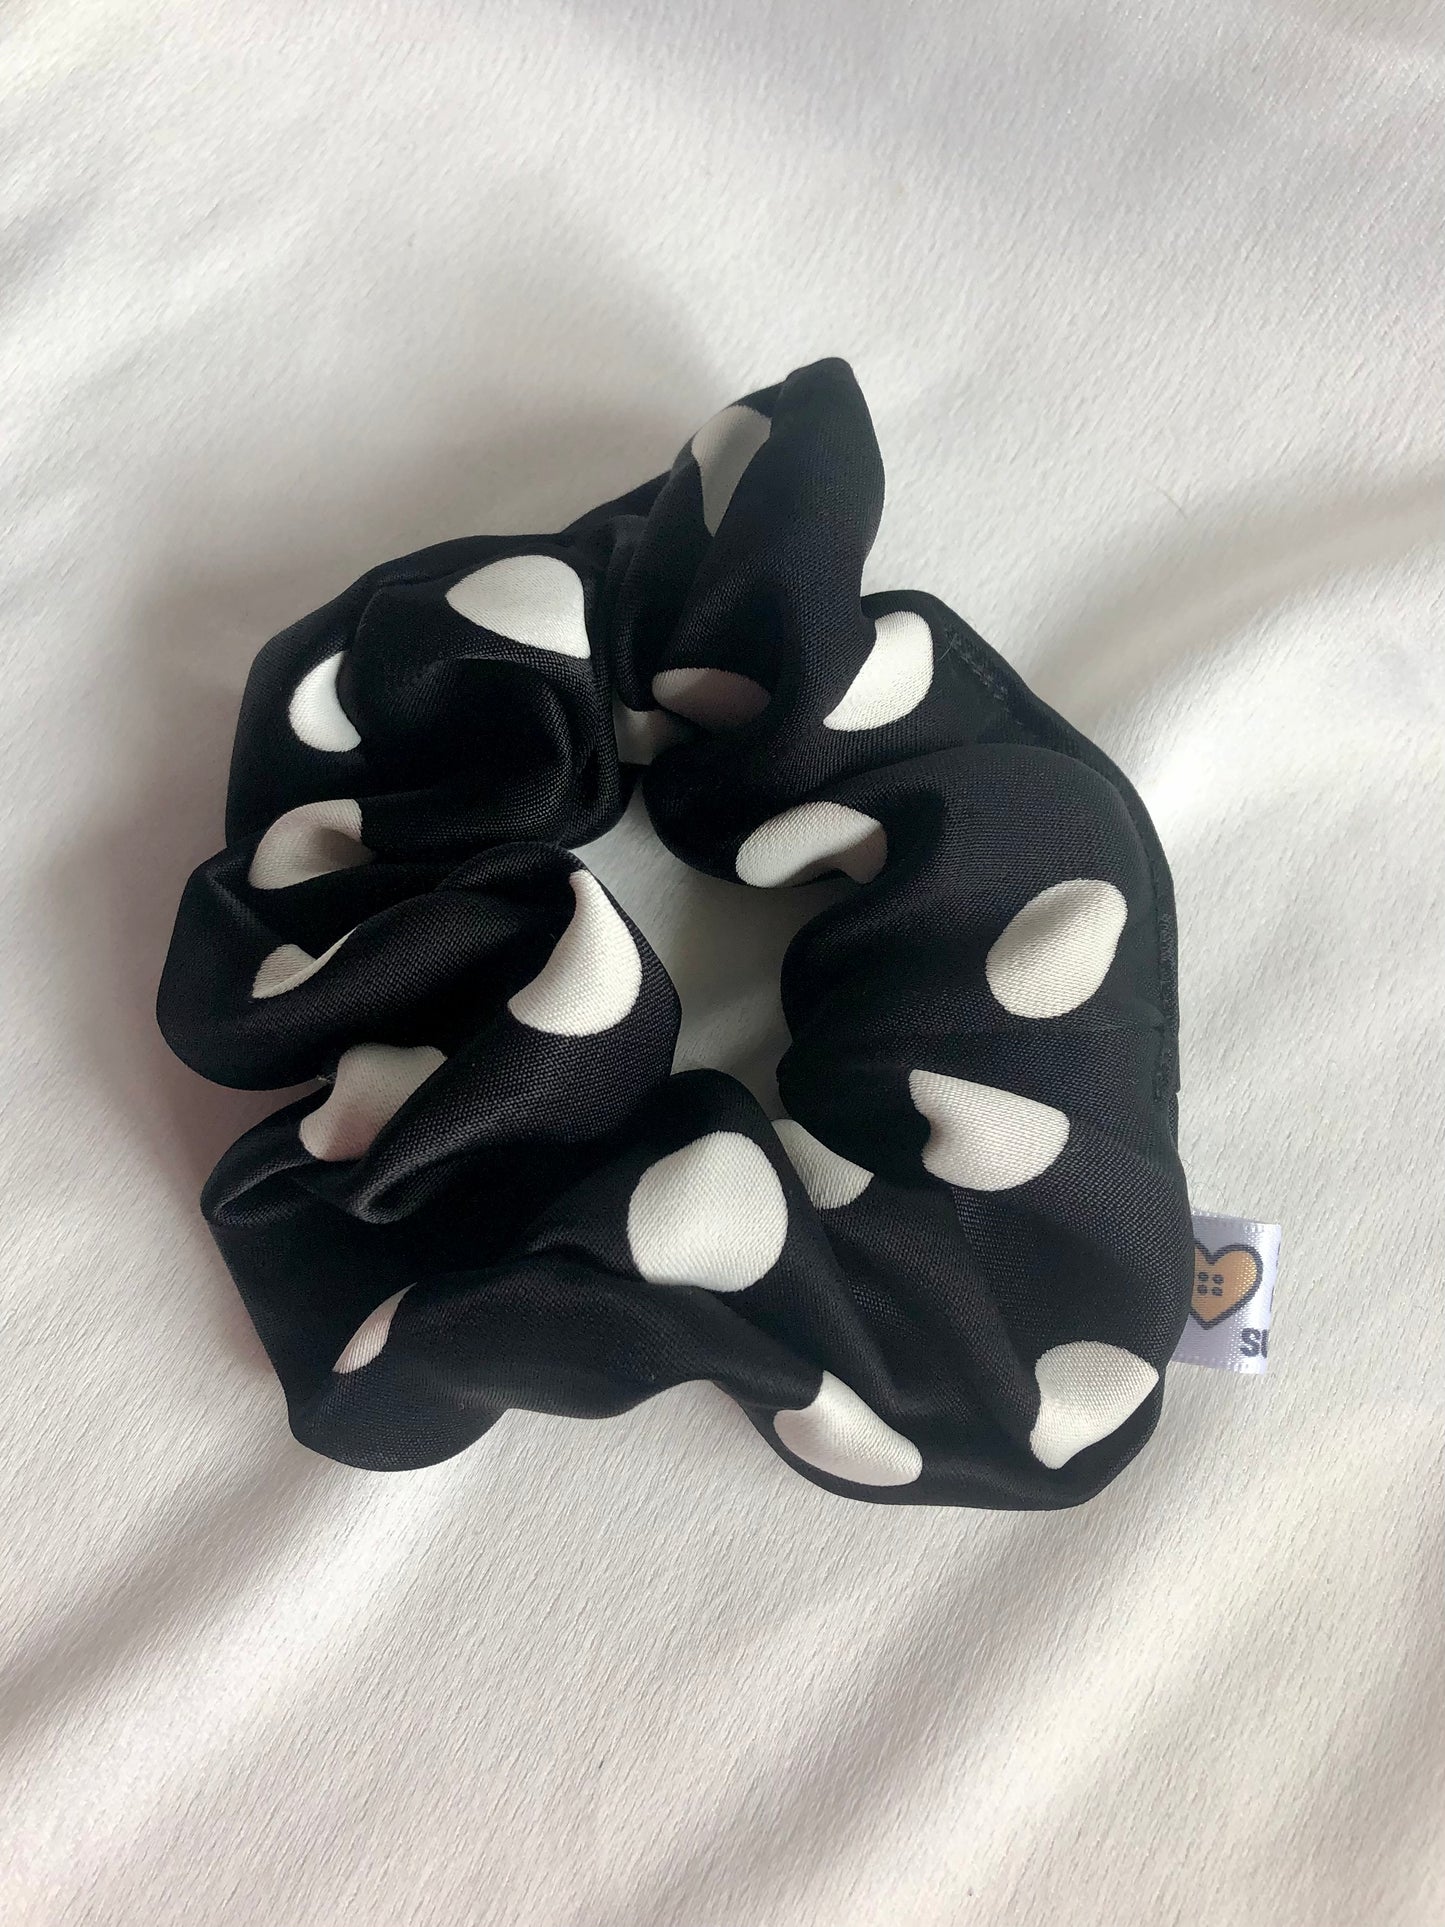 Black and White Polka Dot Satin Hair Scrunchie - choose size